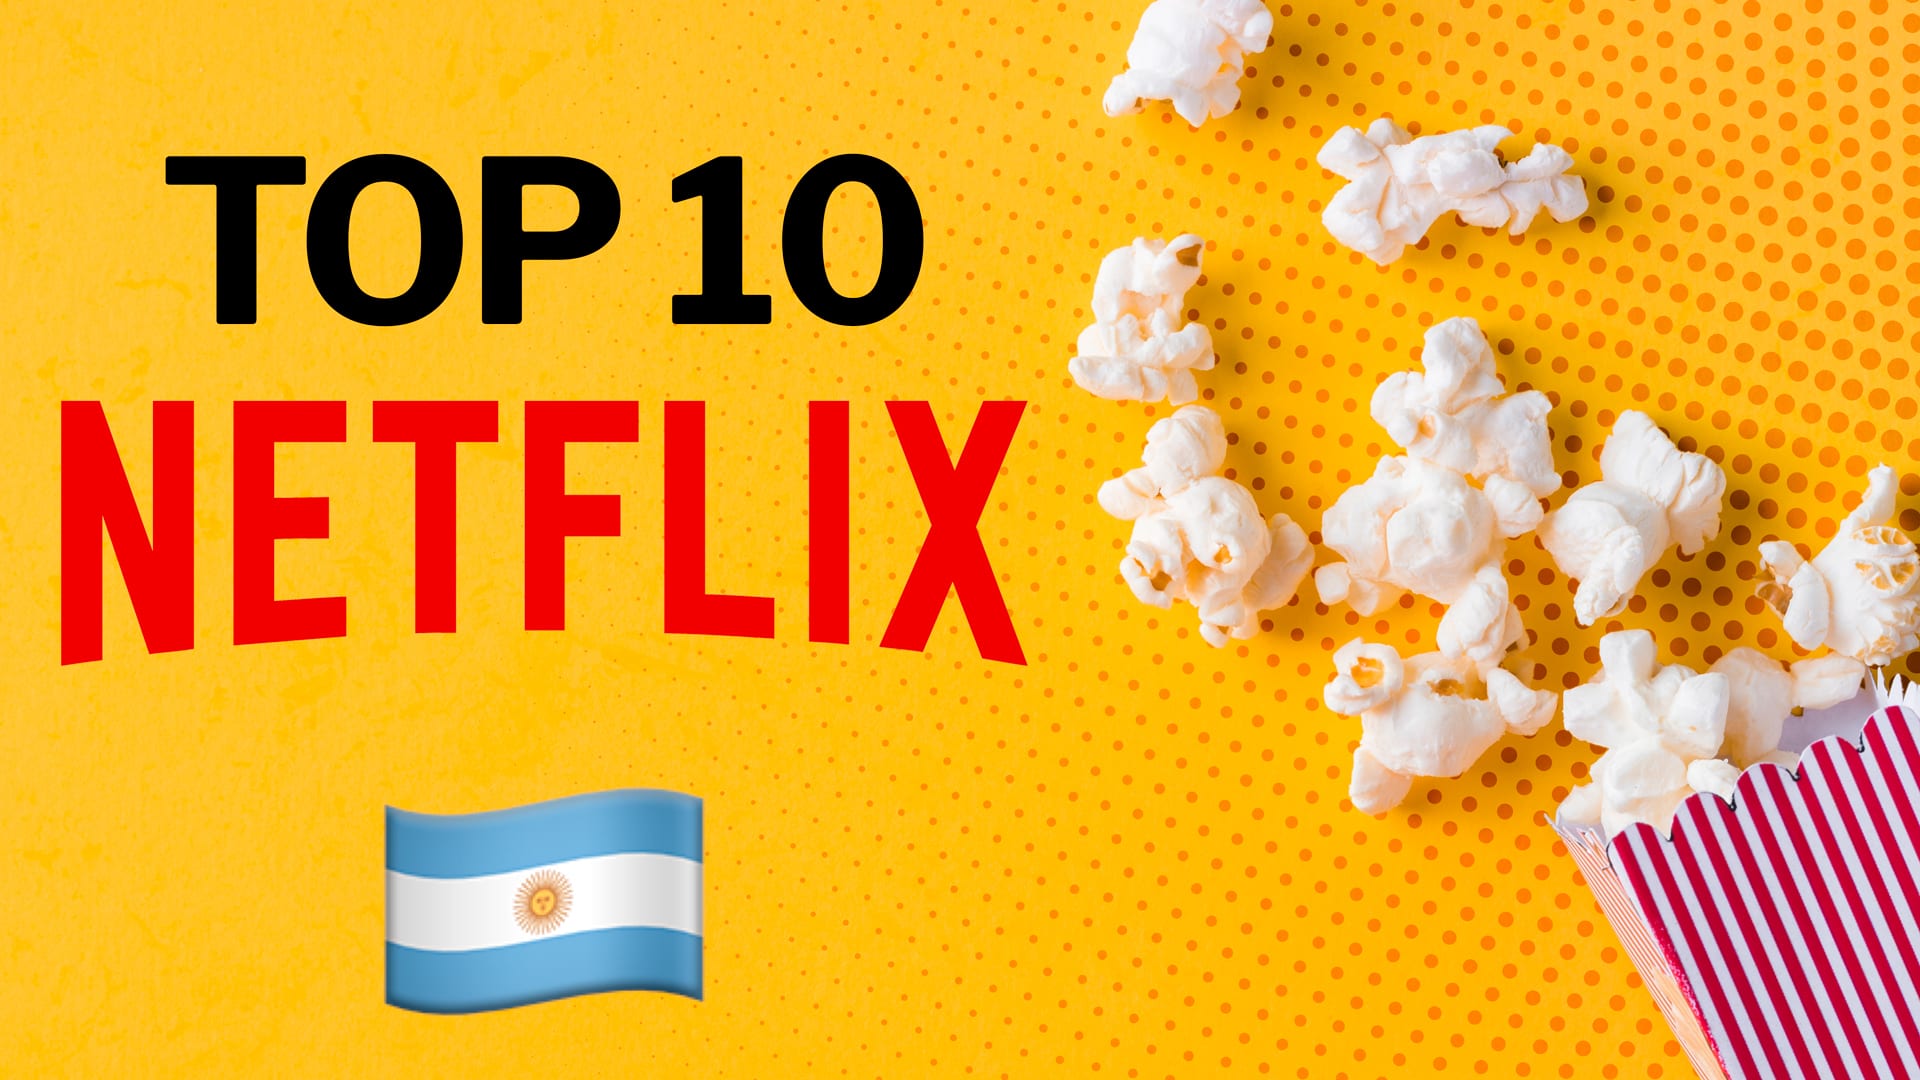 Cuál es la serie más vista en Netflix Argentina hoy